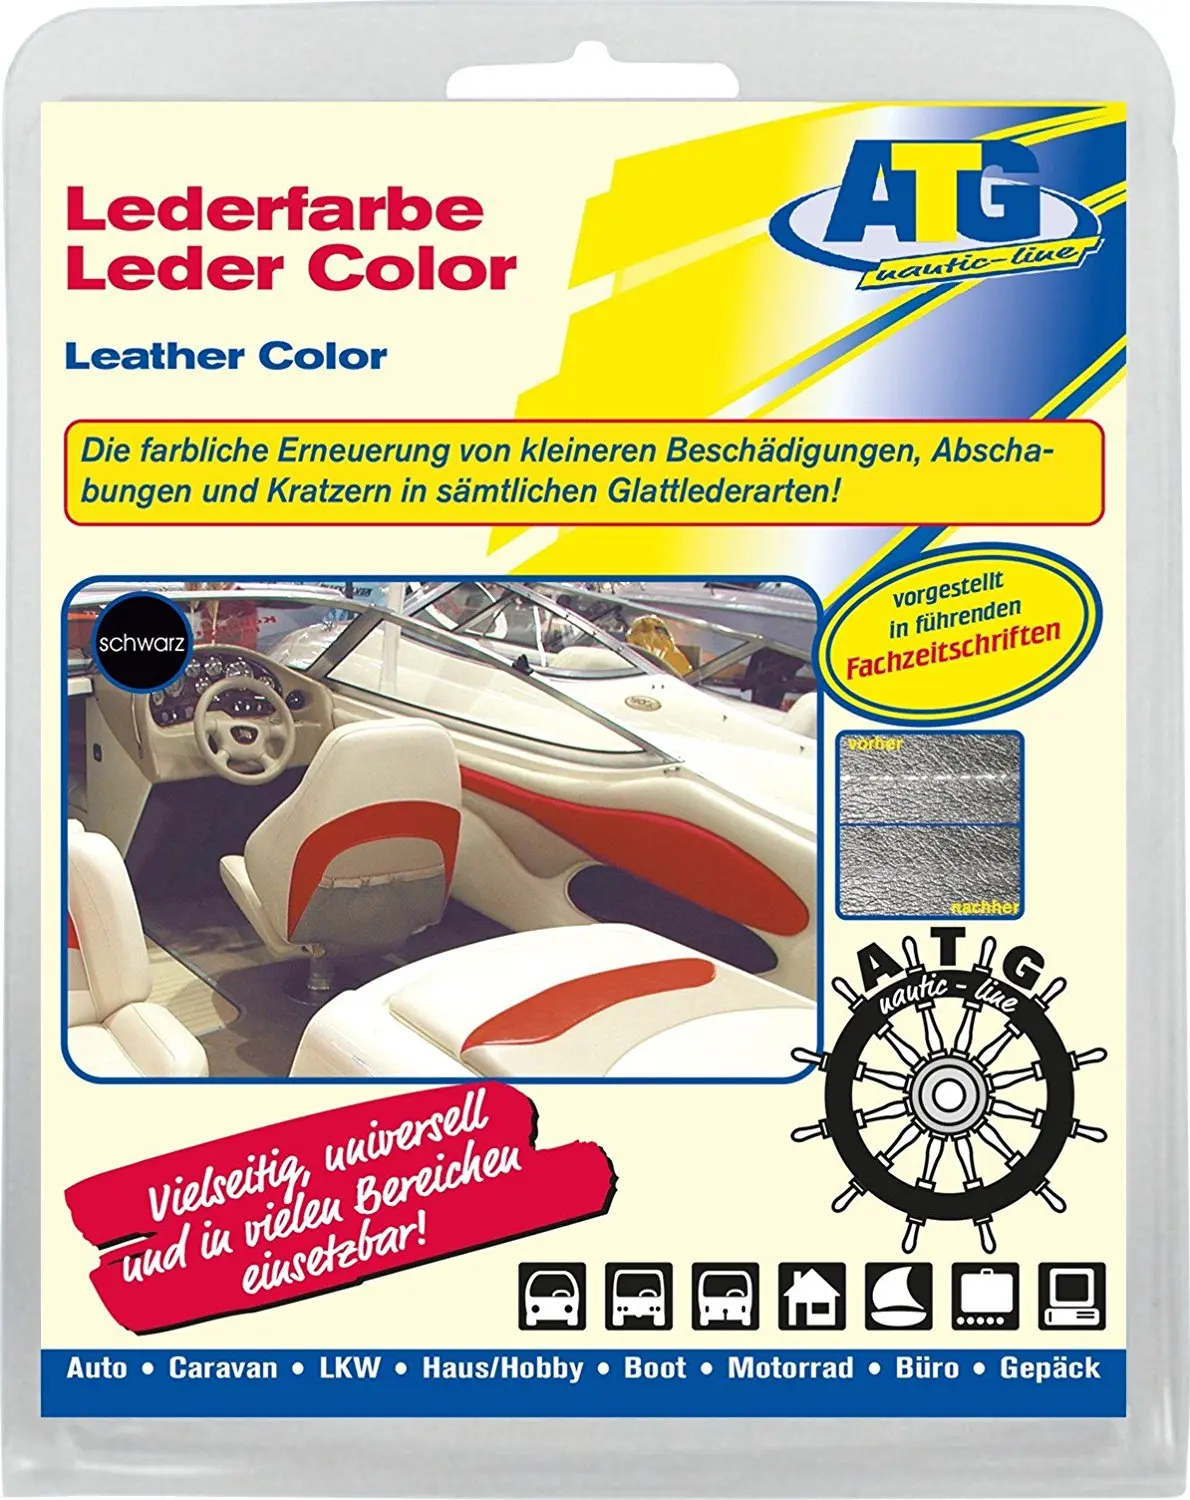 Buy Boat Leather Leatherette Dye Paint 